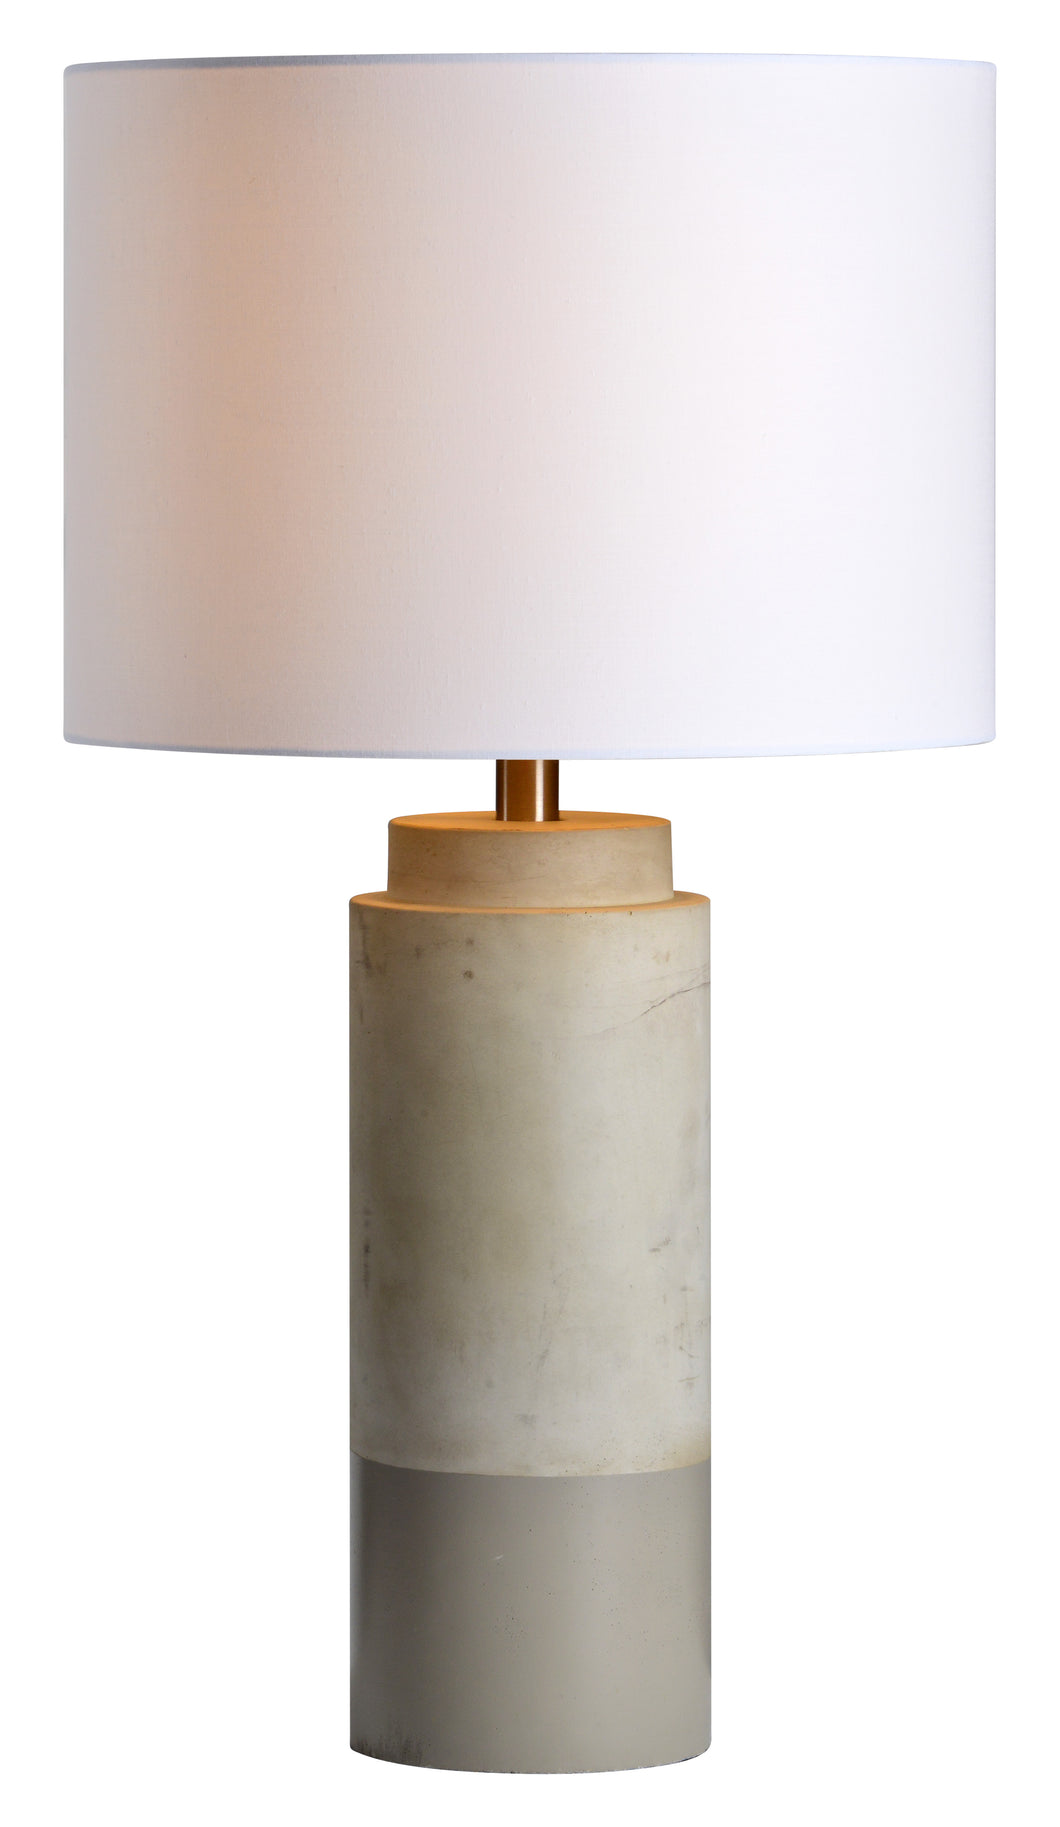 Lagertha Table Lamp - Furniture Depot